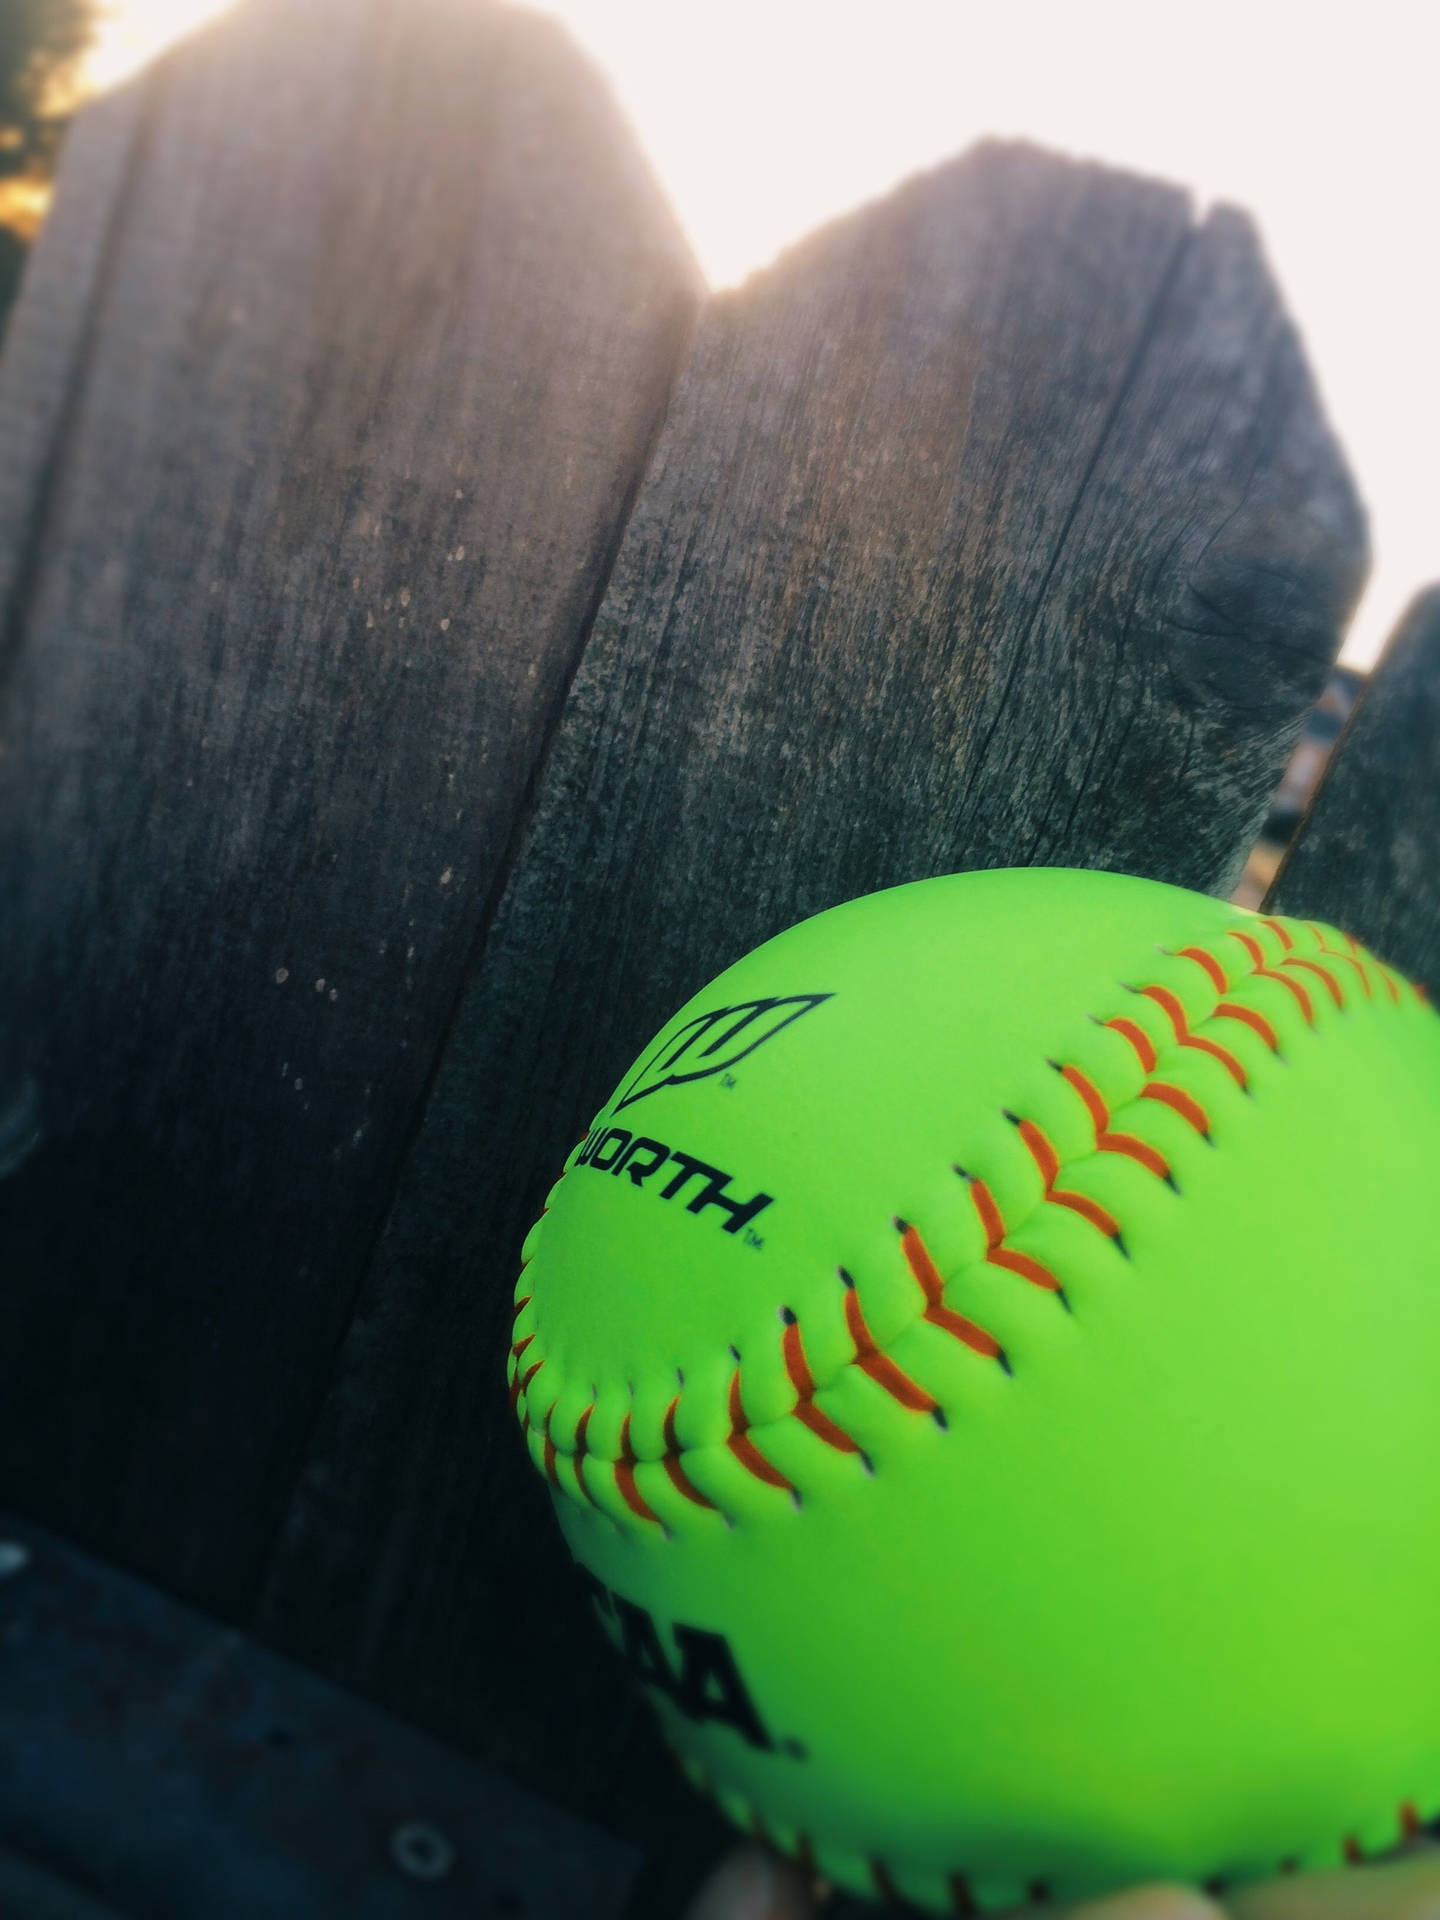 Cute Softball In Backyard Wallpaper